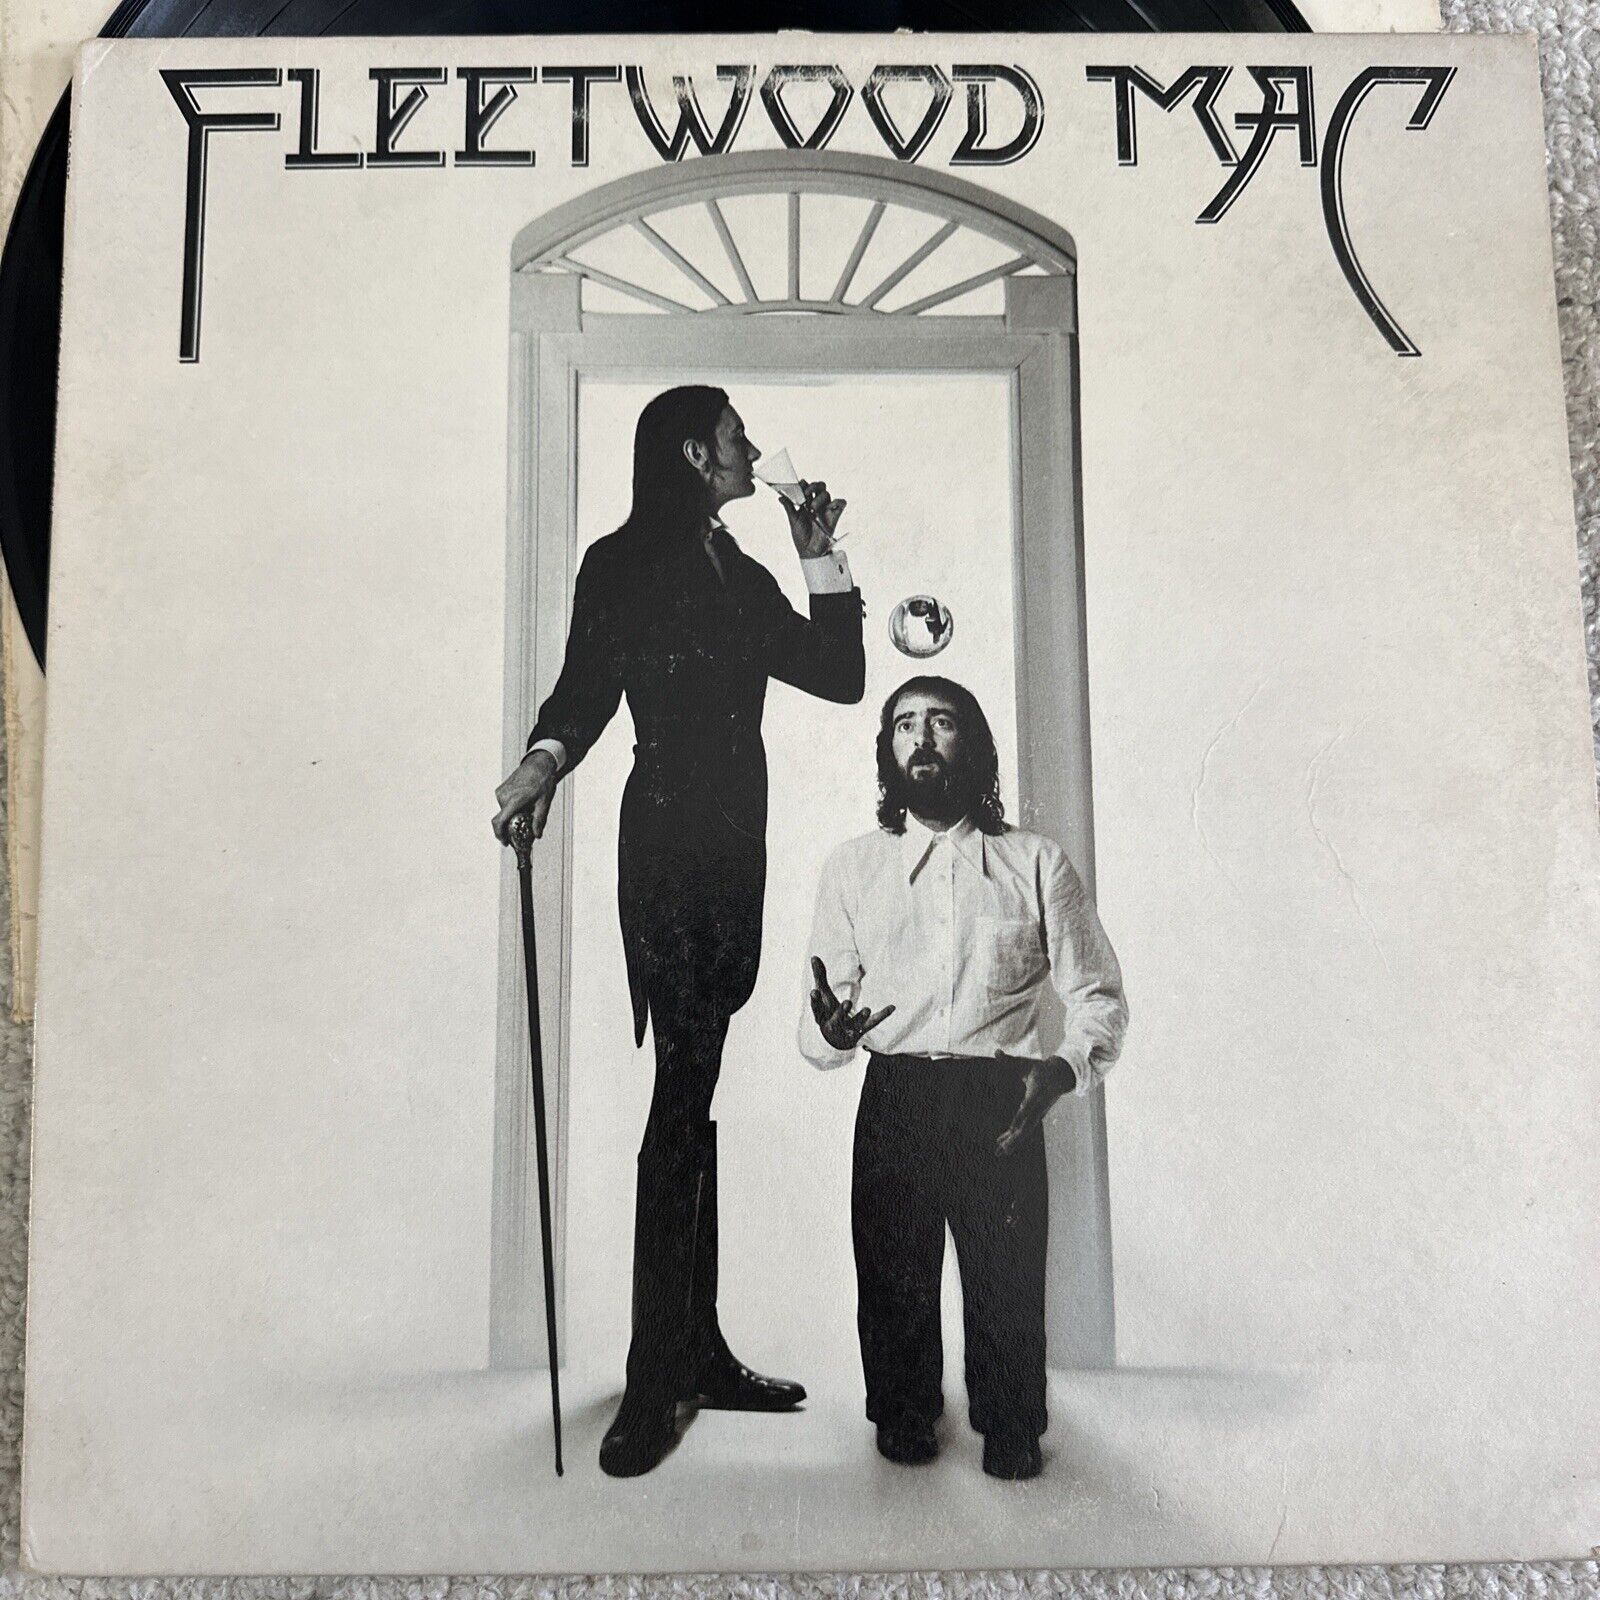 Fleetwood Mac - Self-Titled (Vinyl LP, 1975) Complete with Insert - Warner Bros.